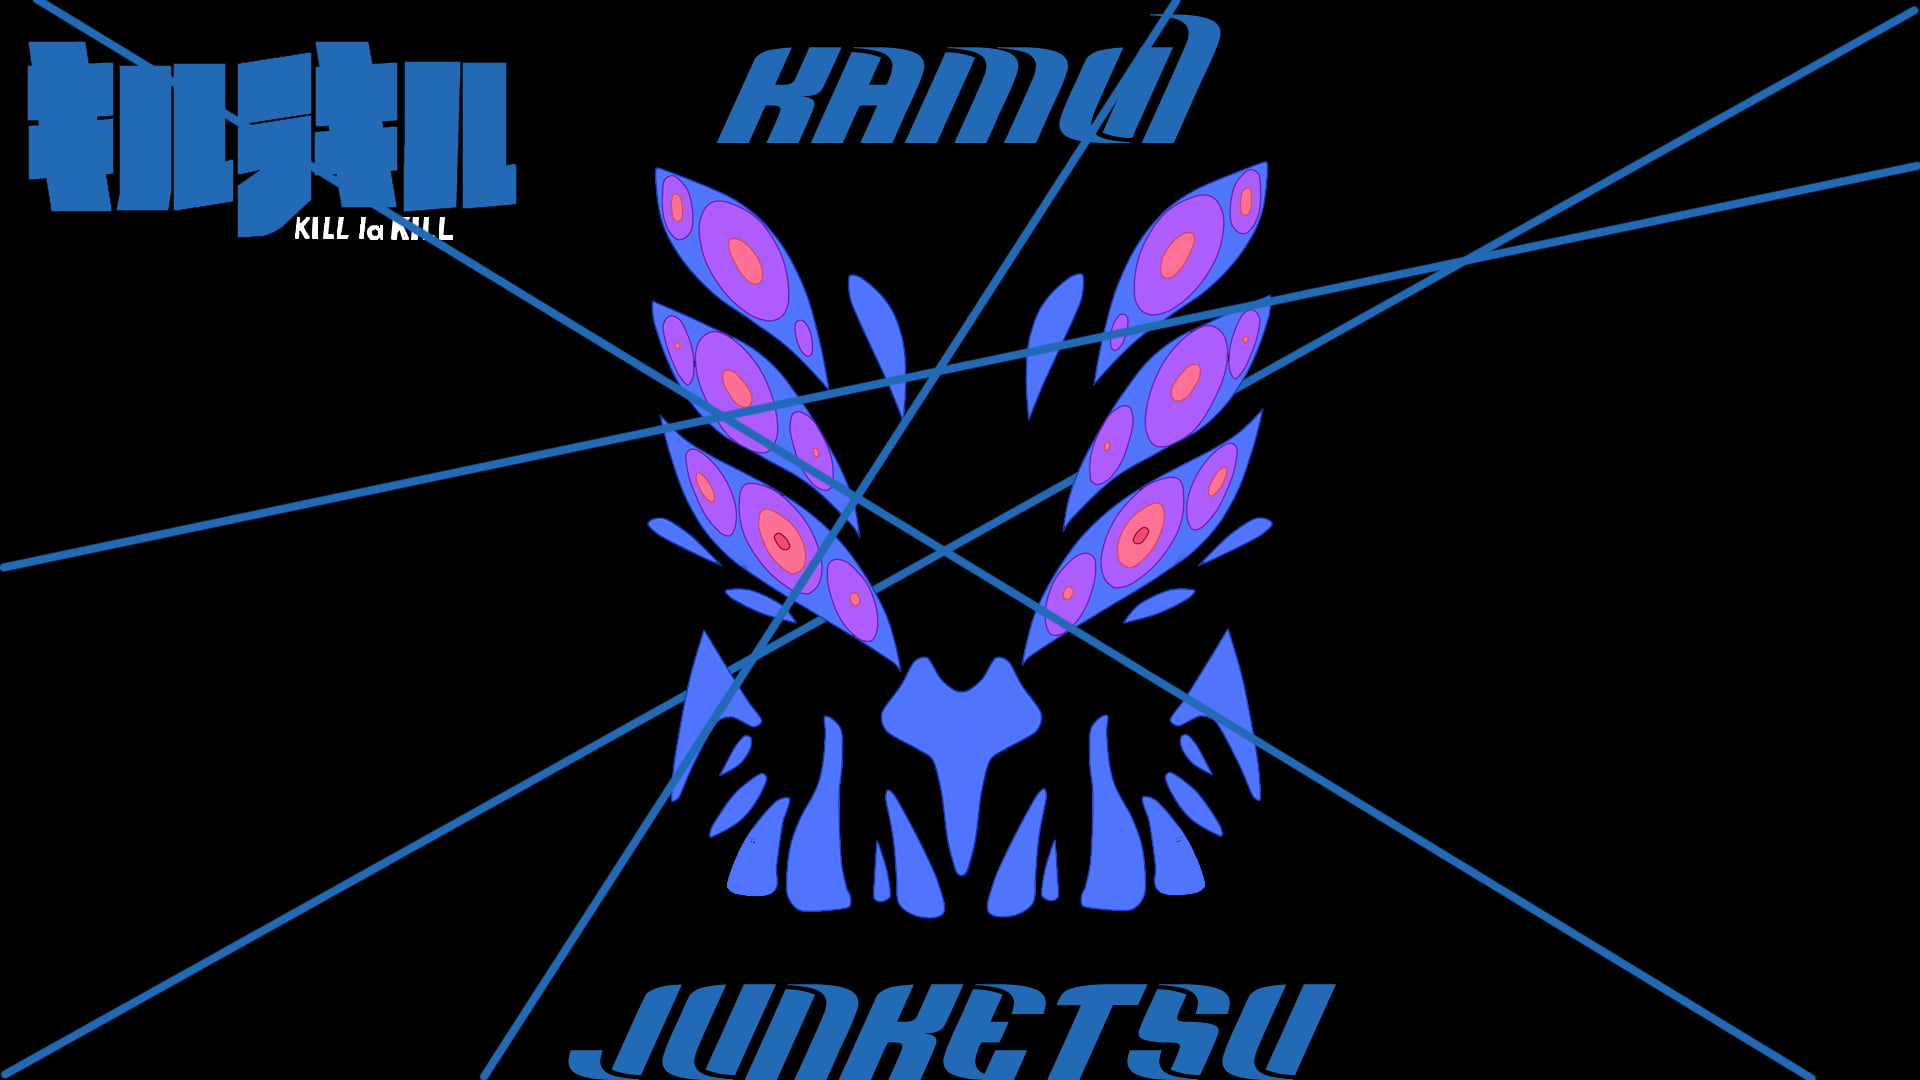 Hamul Junketsu digital wallpaper, Kill la Kill, artwork, typography, black background